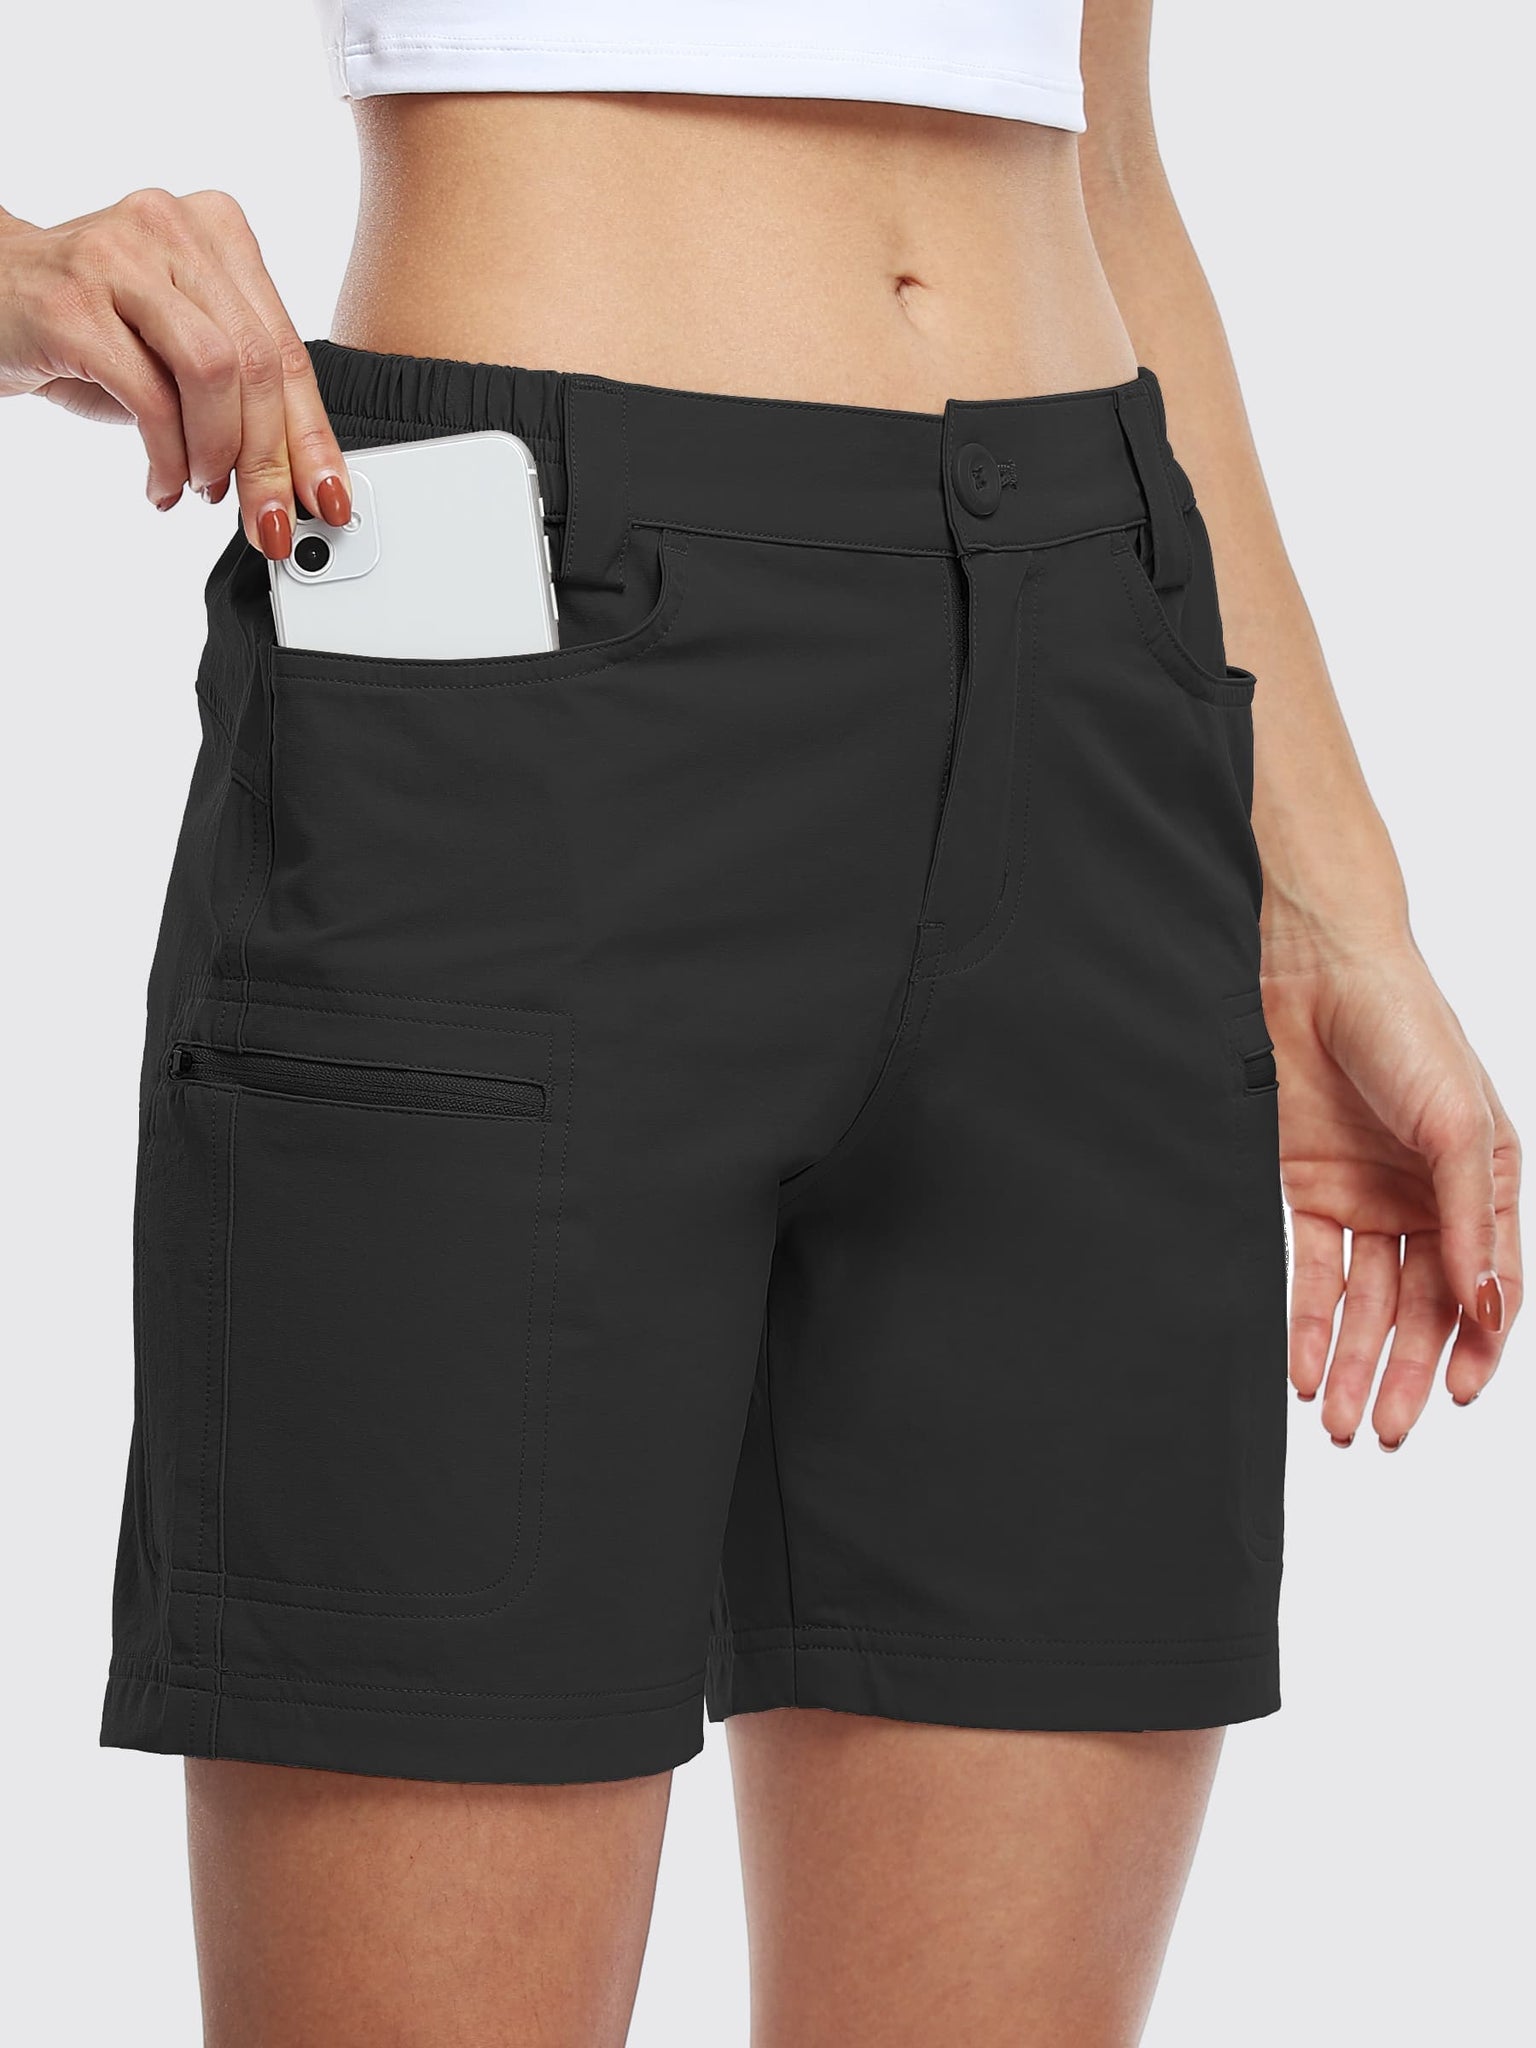 Willit Women's Outdoor Cargo Shorts 6 Inseam_Black_model3